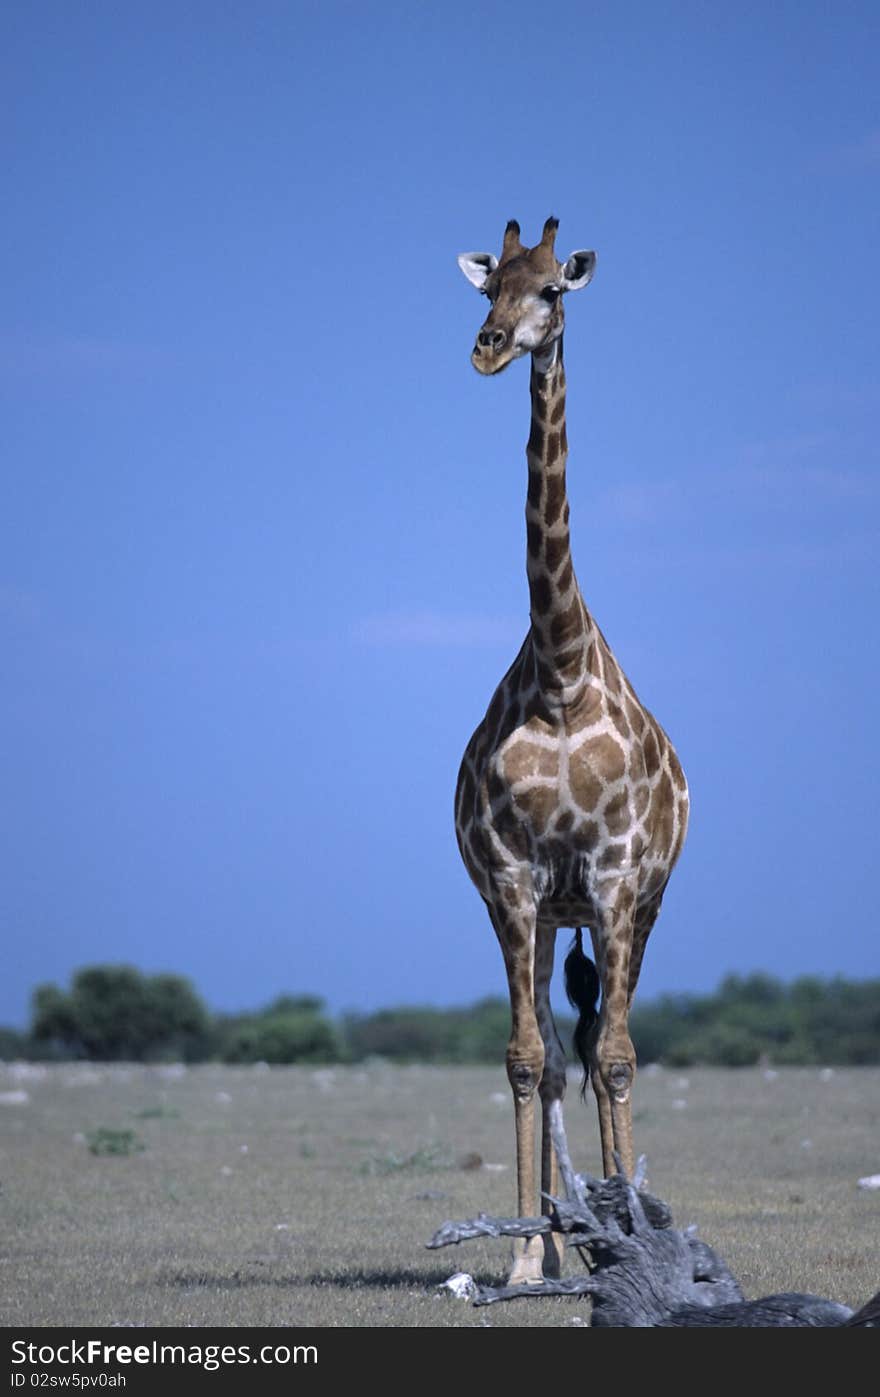 A  curious giraffe in the etosha national park